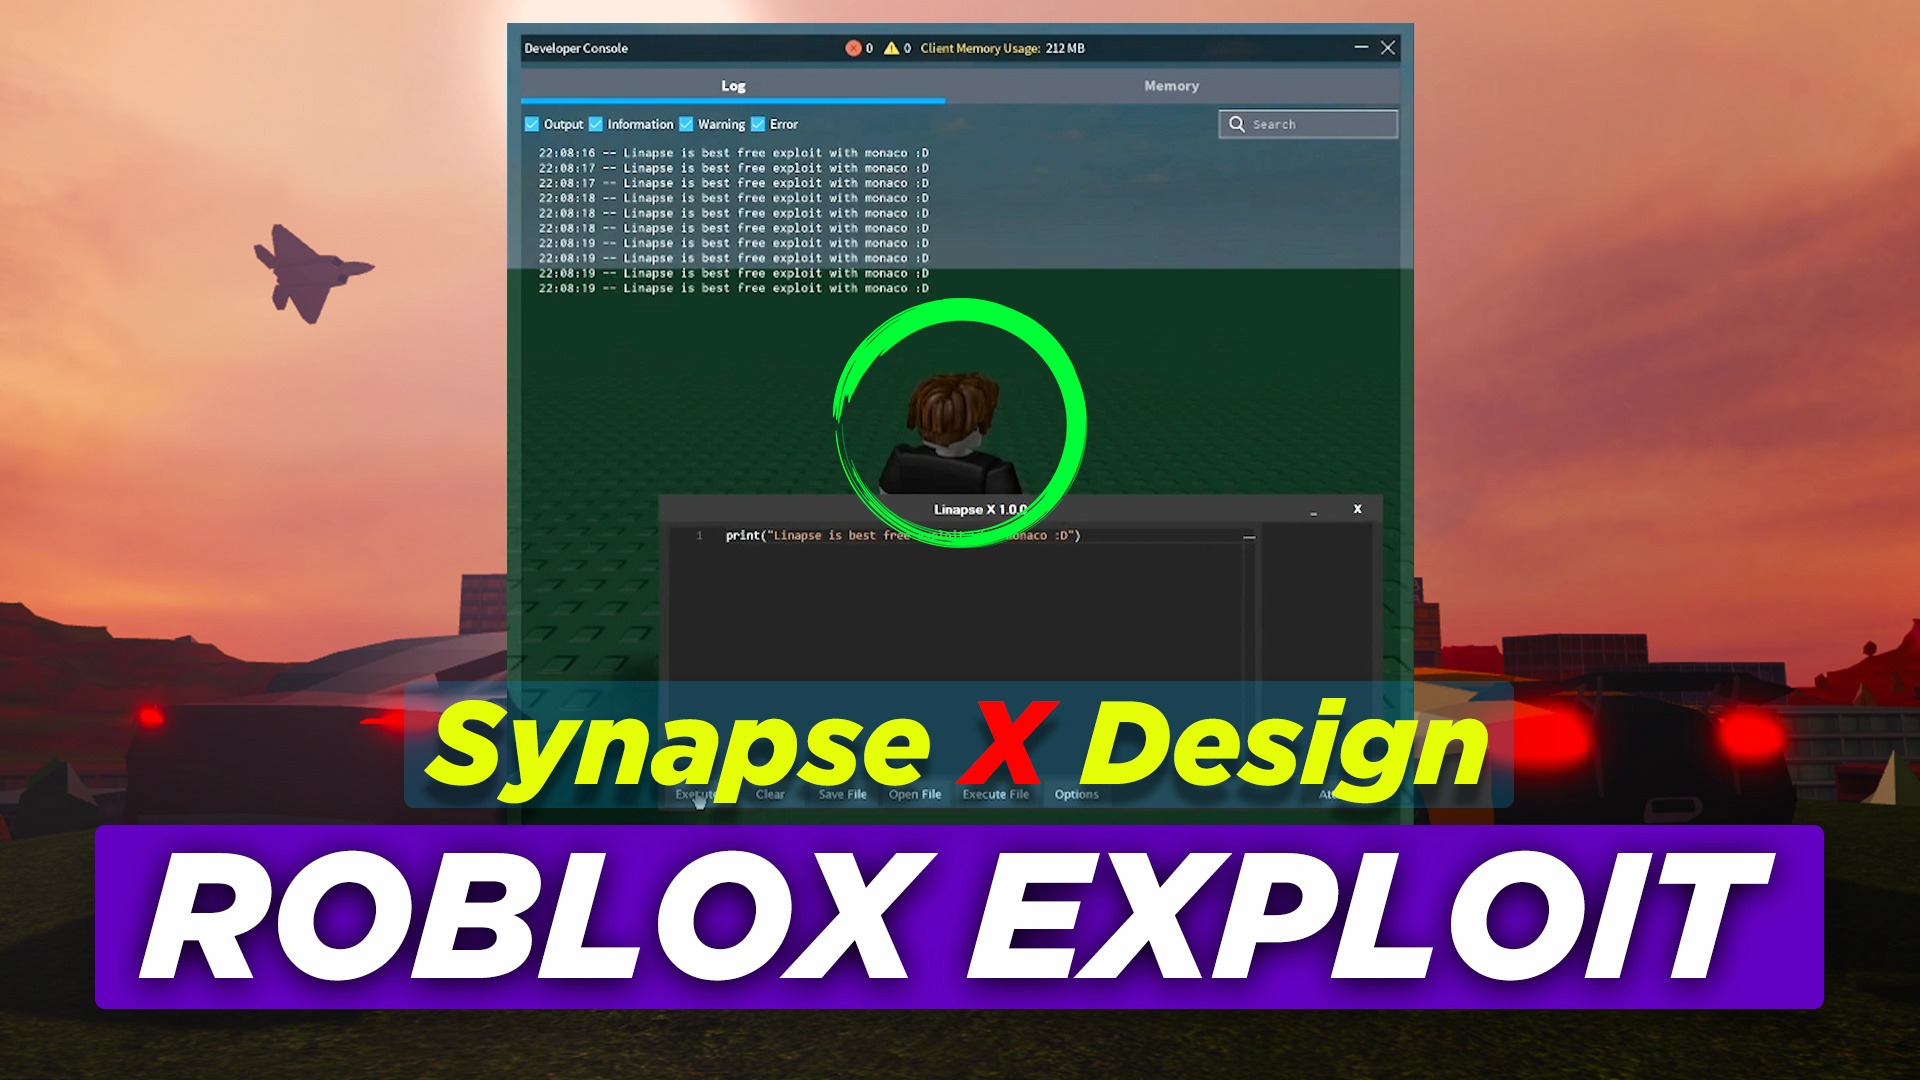 New Roblox Exploit Synapse X Analog Telegraph - roblox dev console exploit